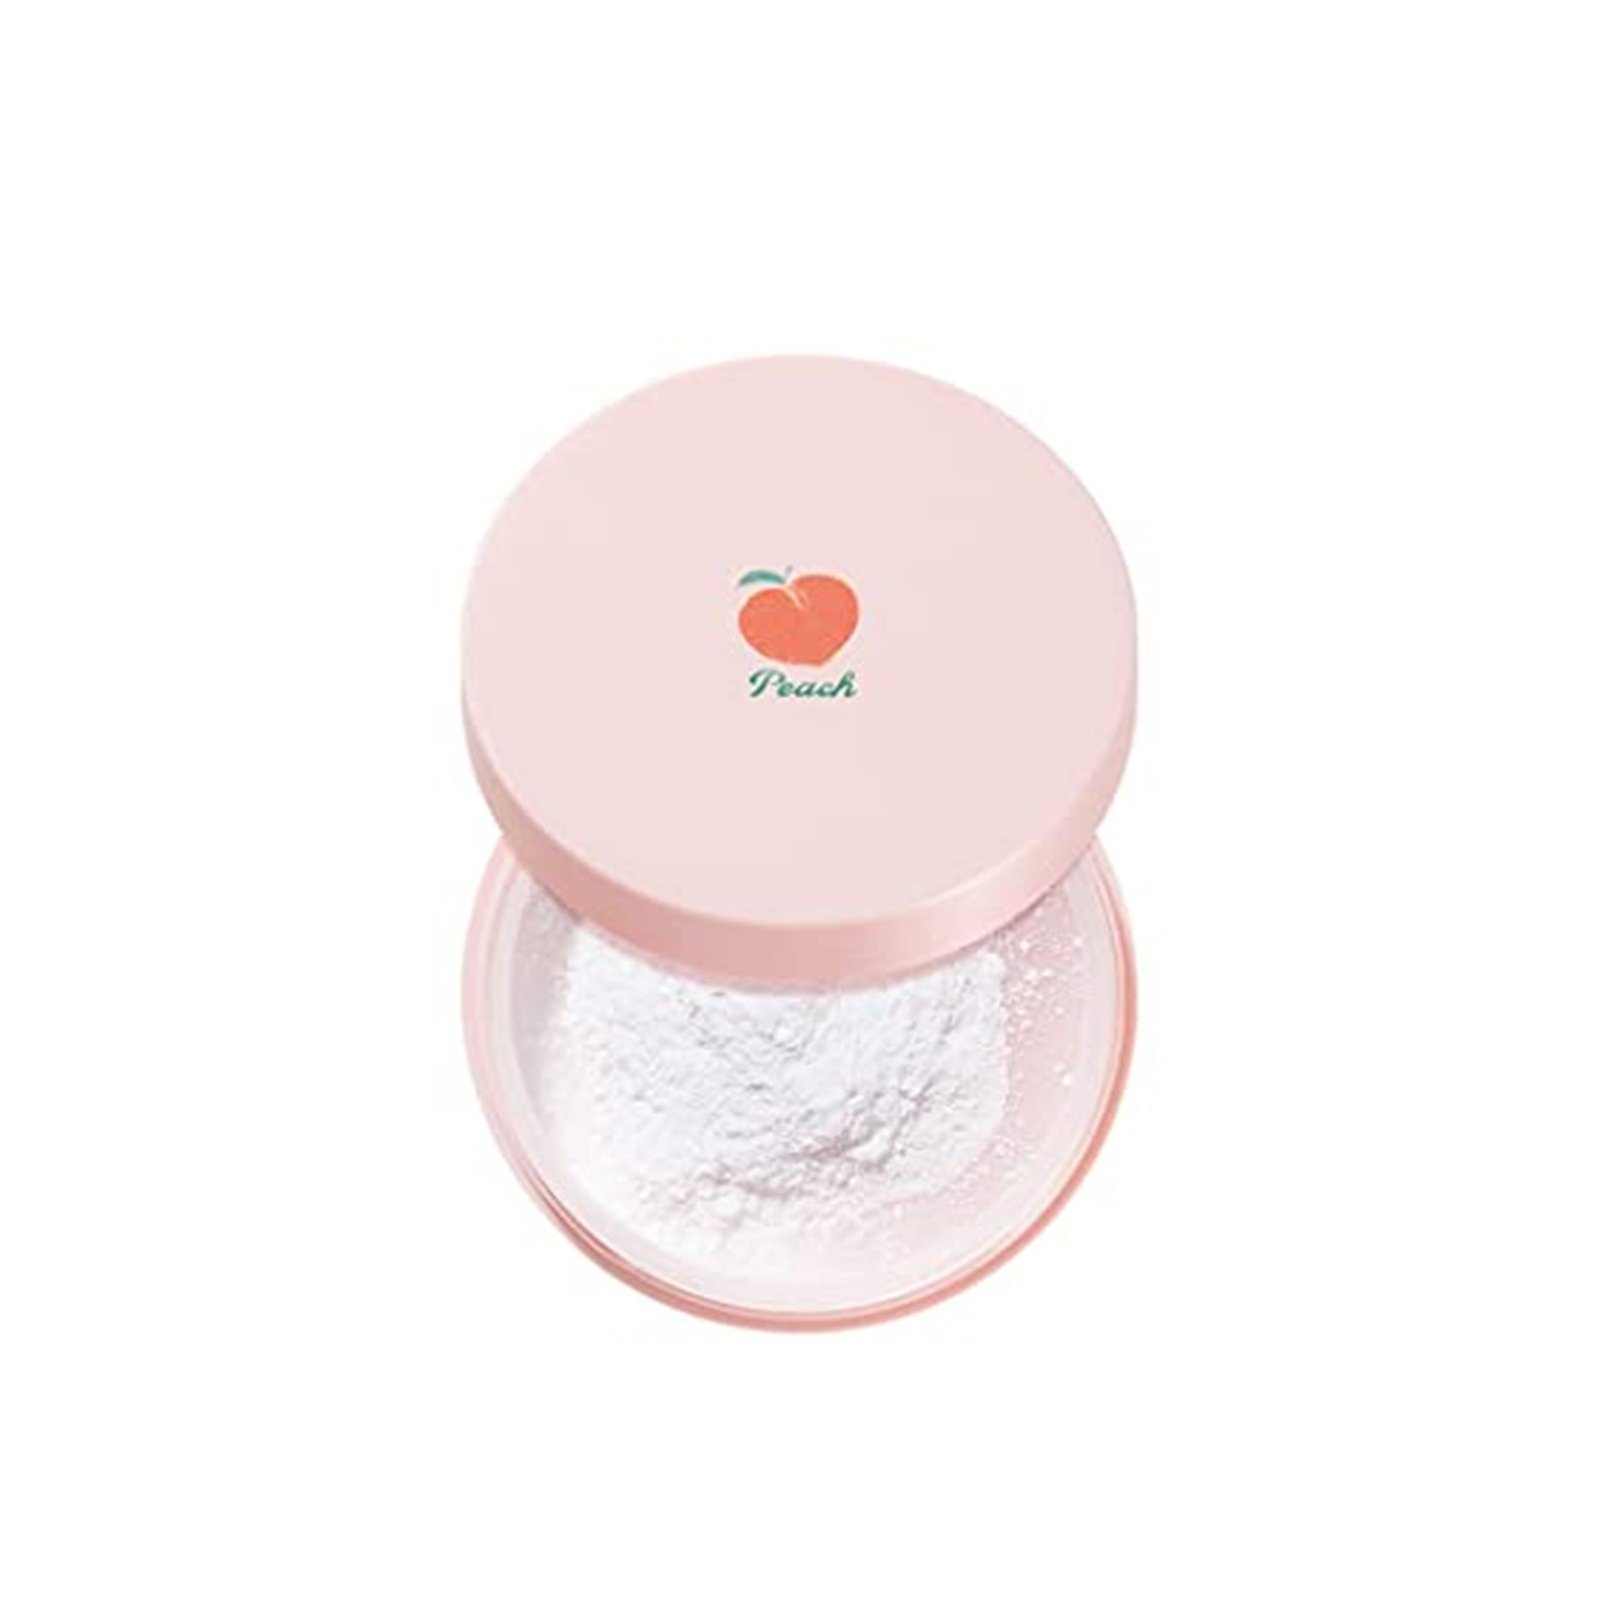 SKINFOOD Peach Cotton Multi Finish Powder 15g (0.53 oz)